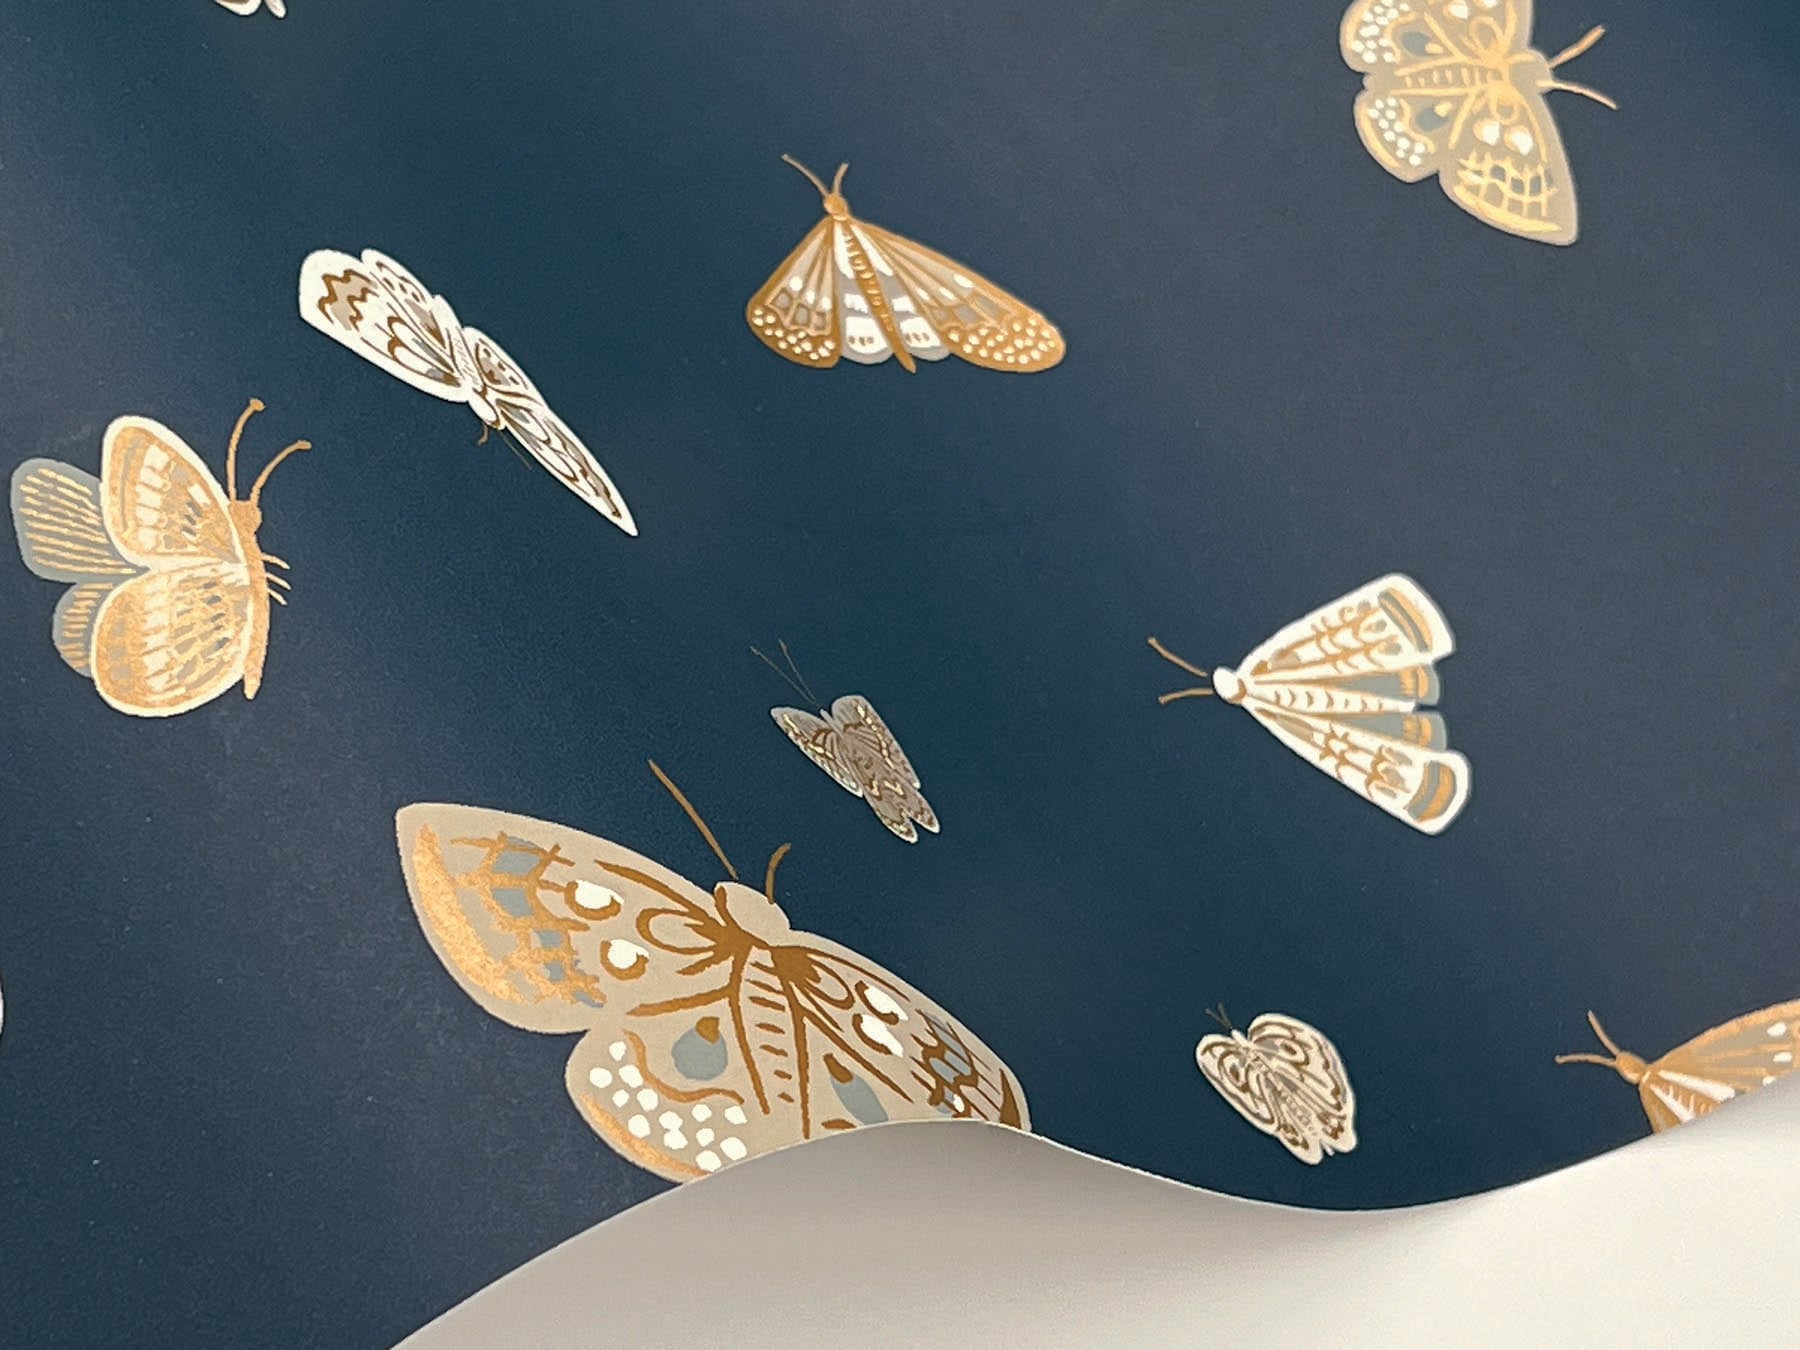 Butterfly House Wallpaper Wallpaper Rifle Paper Co.   